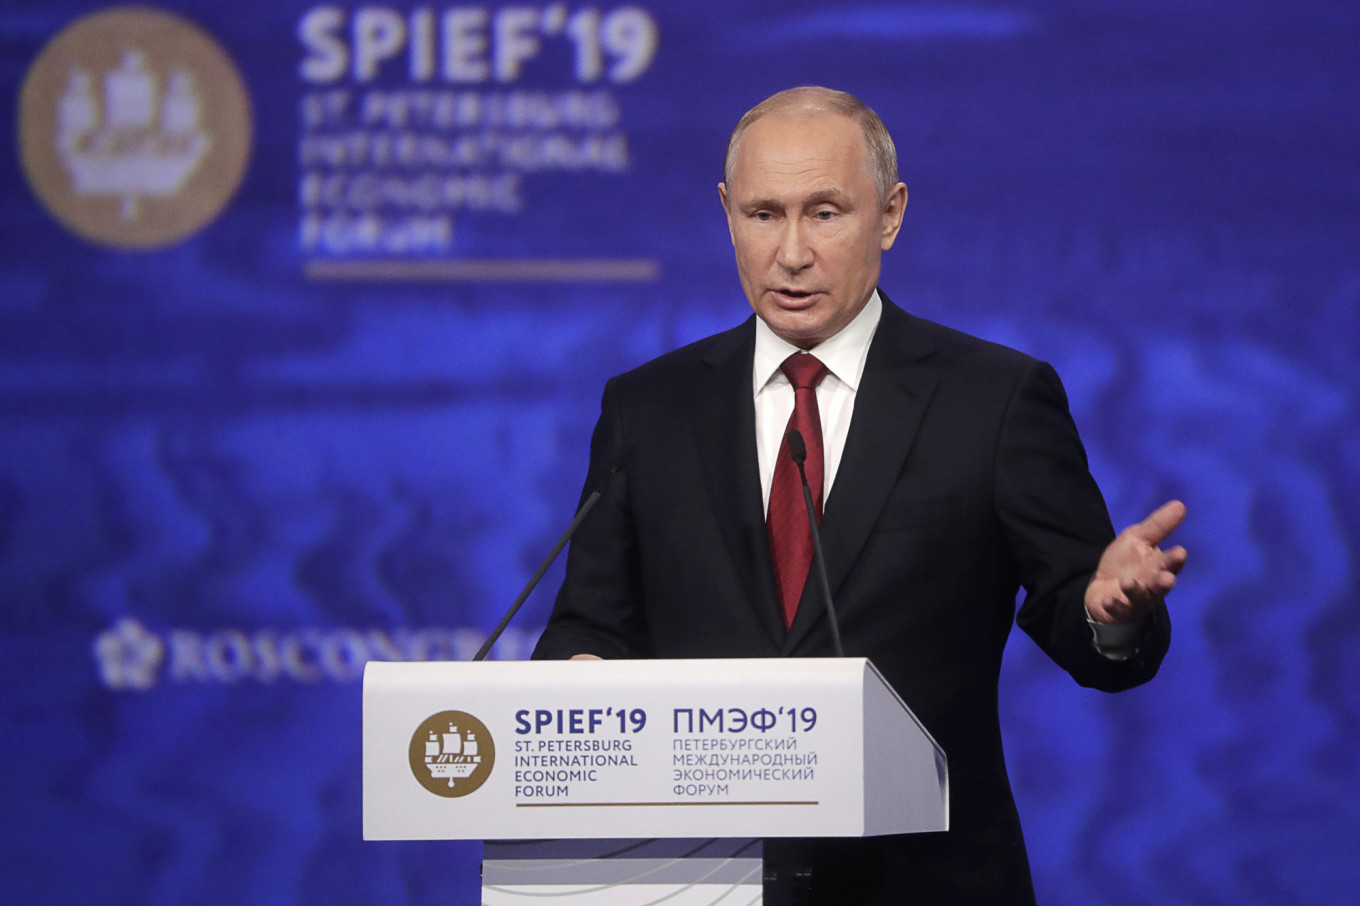 Putin Talks Tough in St. Petersburg Forum Address – Highlights